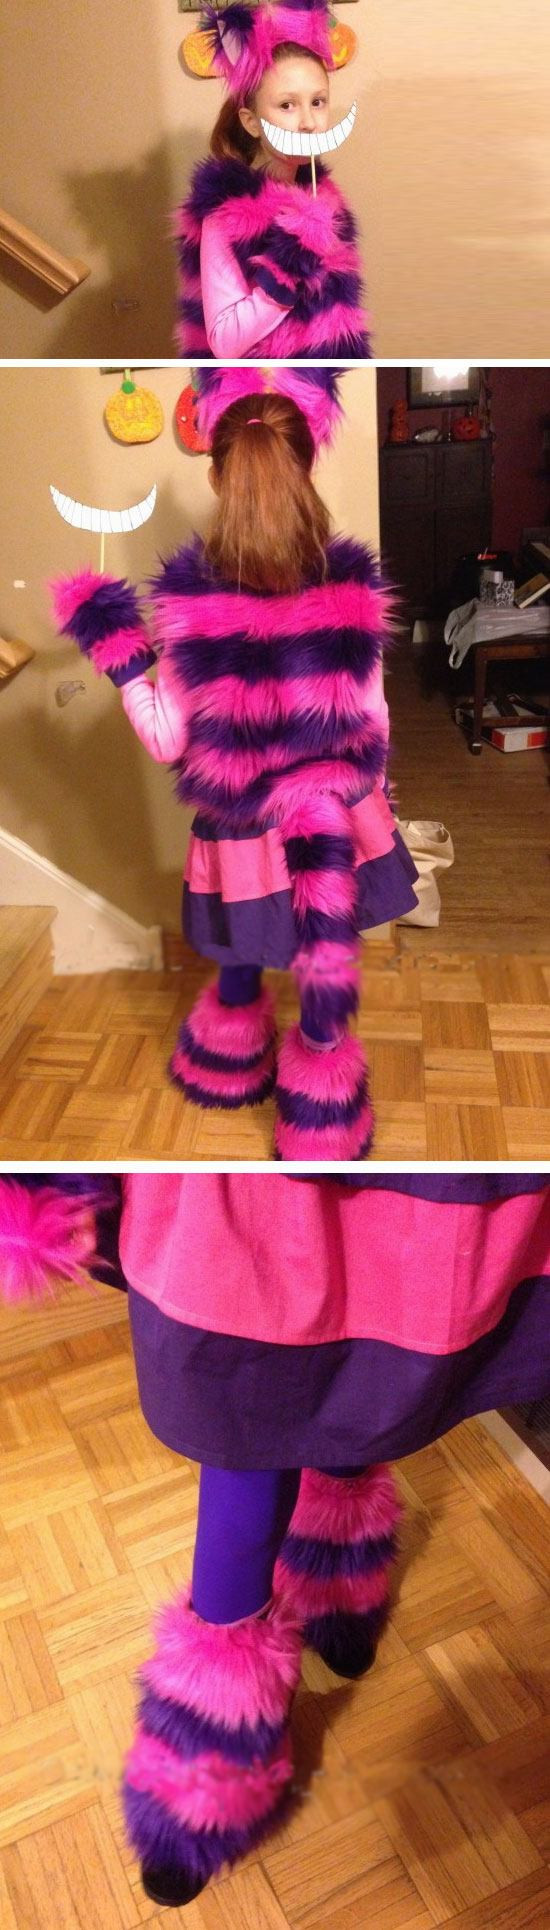 Cheshire Cat Costume DIY
 25 Easy DIY Halloween Costumes for Kids to Make